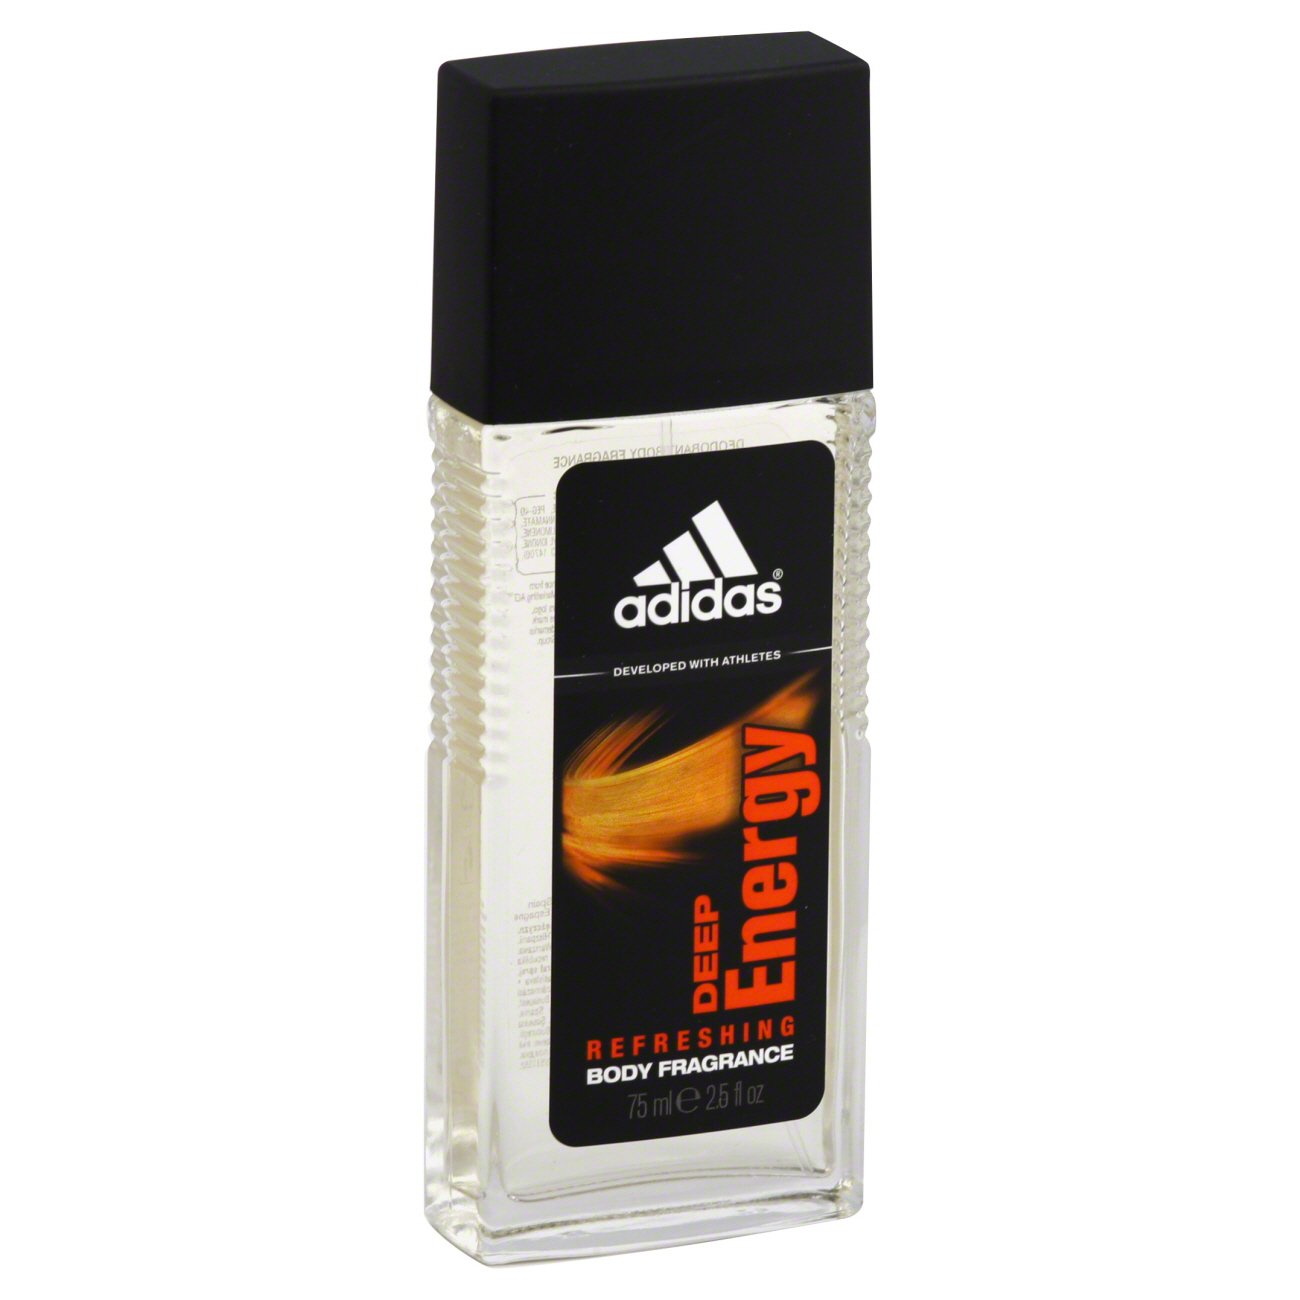 Adidas Energy Body Spray - Shop Fragrance H-E-B